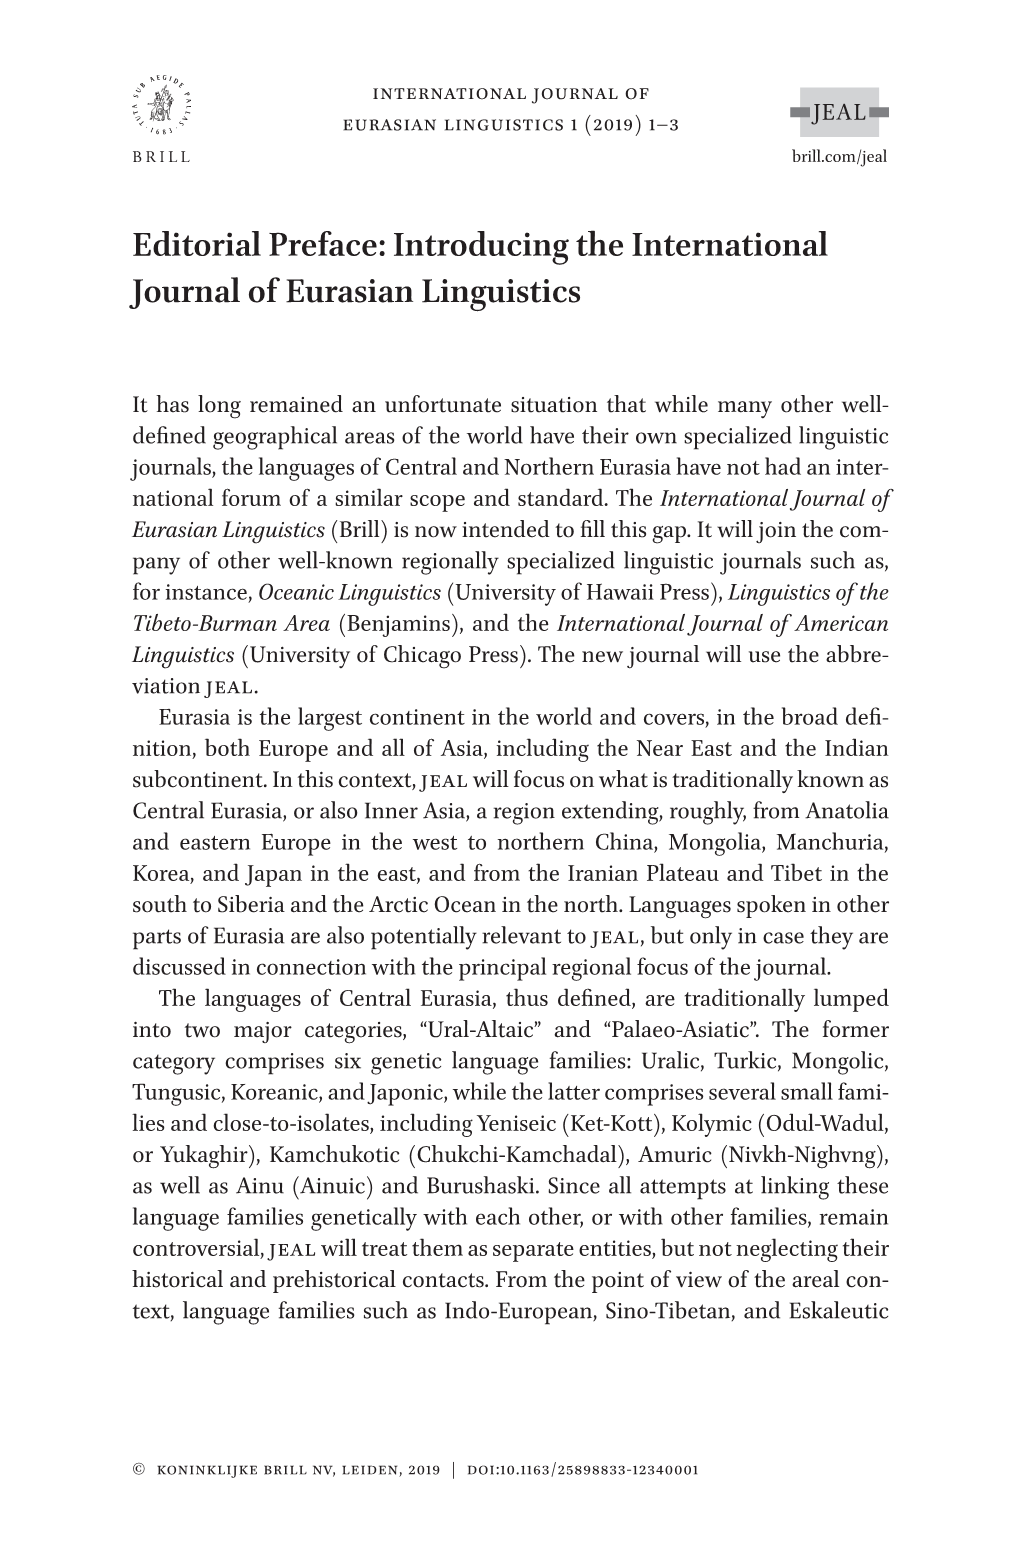 Introducing the International Journal of Eurasian Linguistics